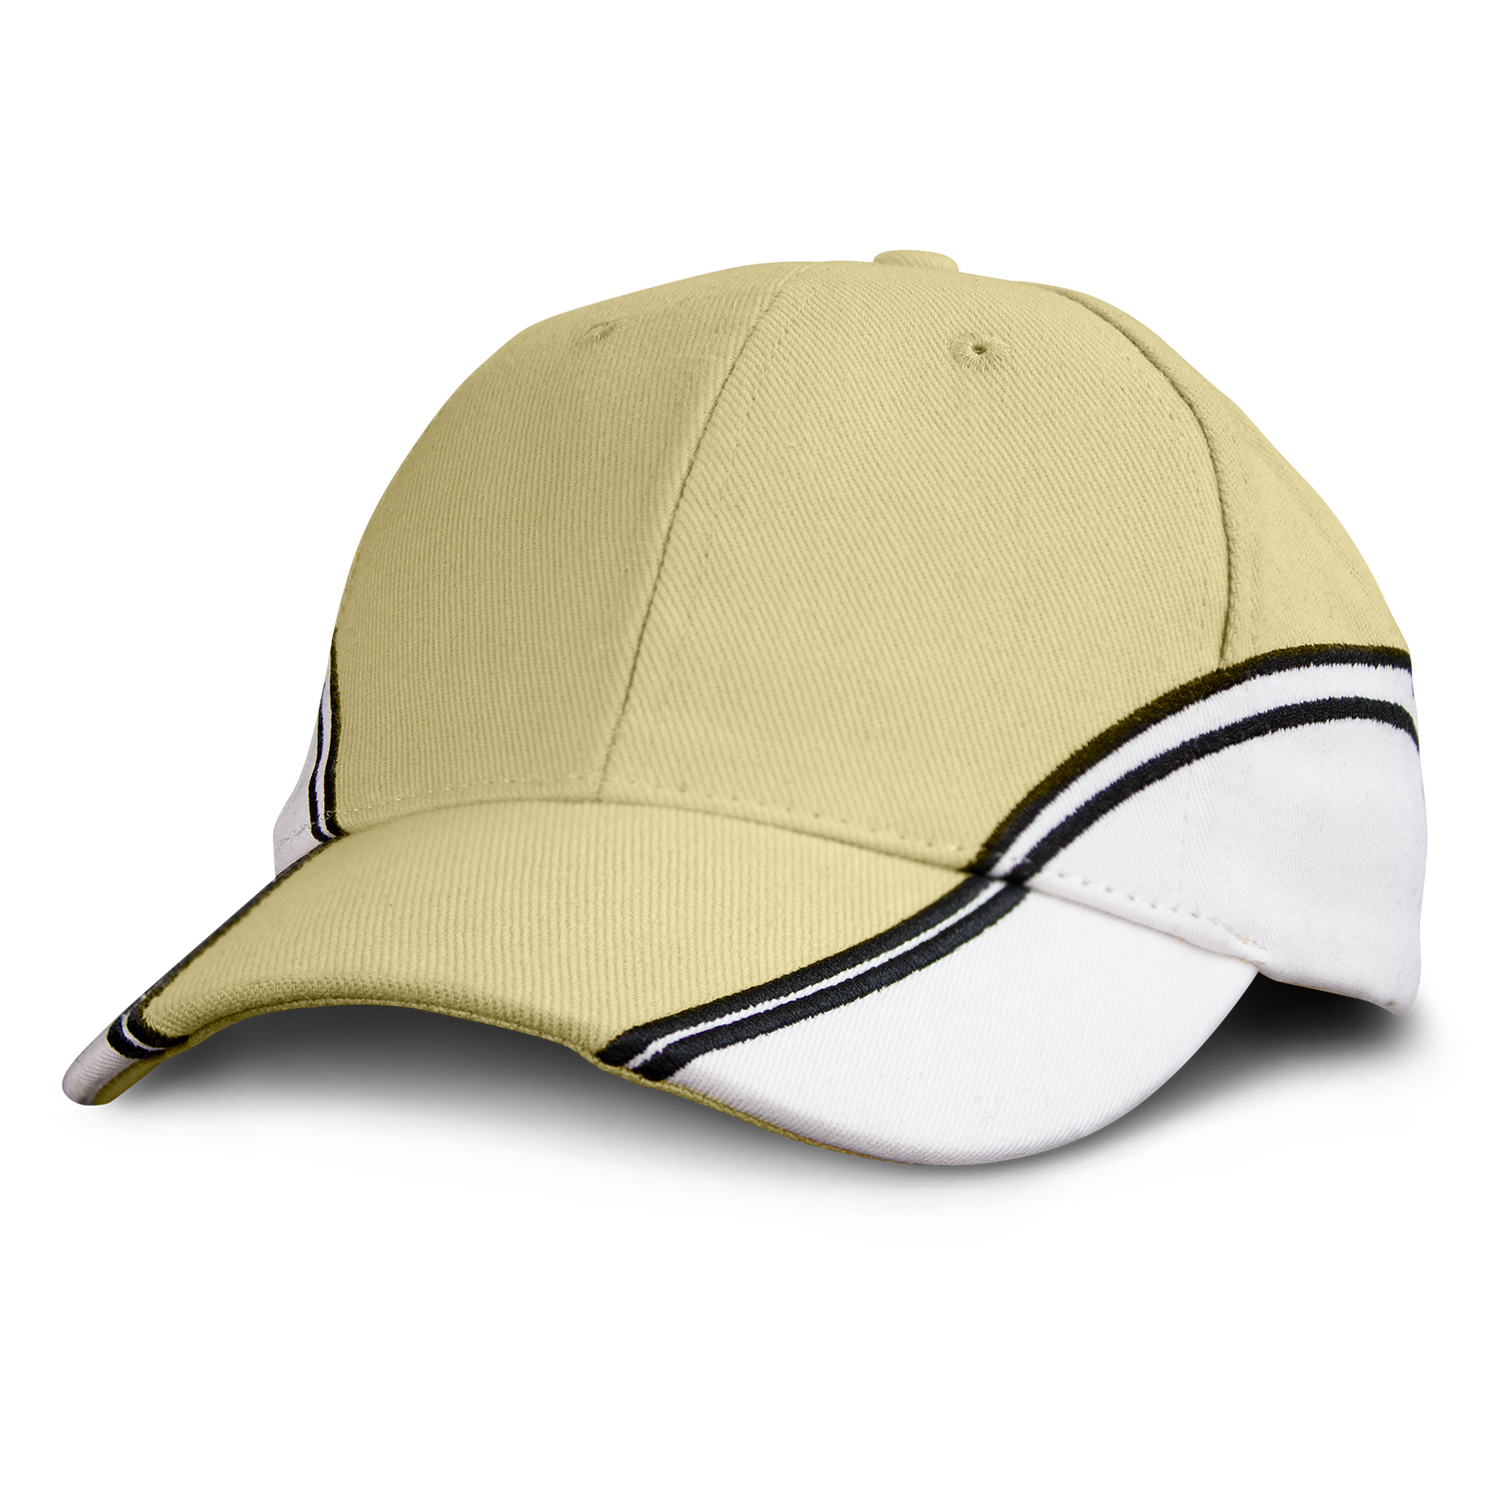 Headwear Express Levin Cap cap